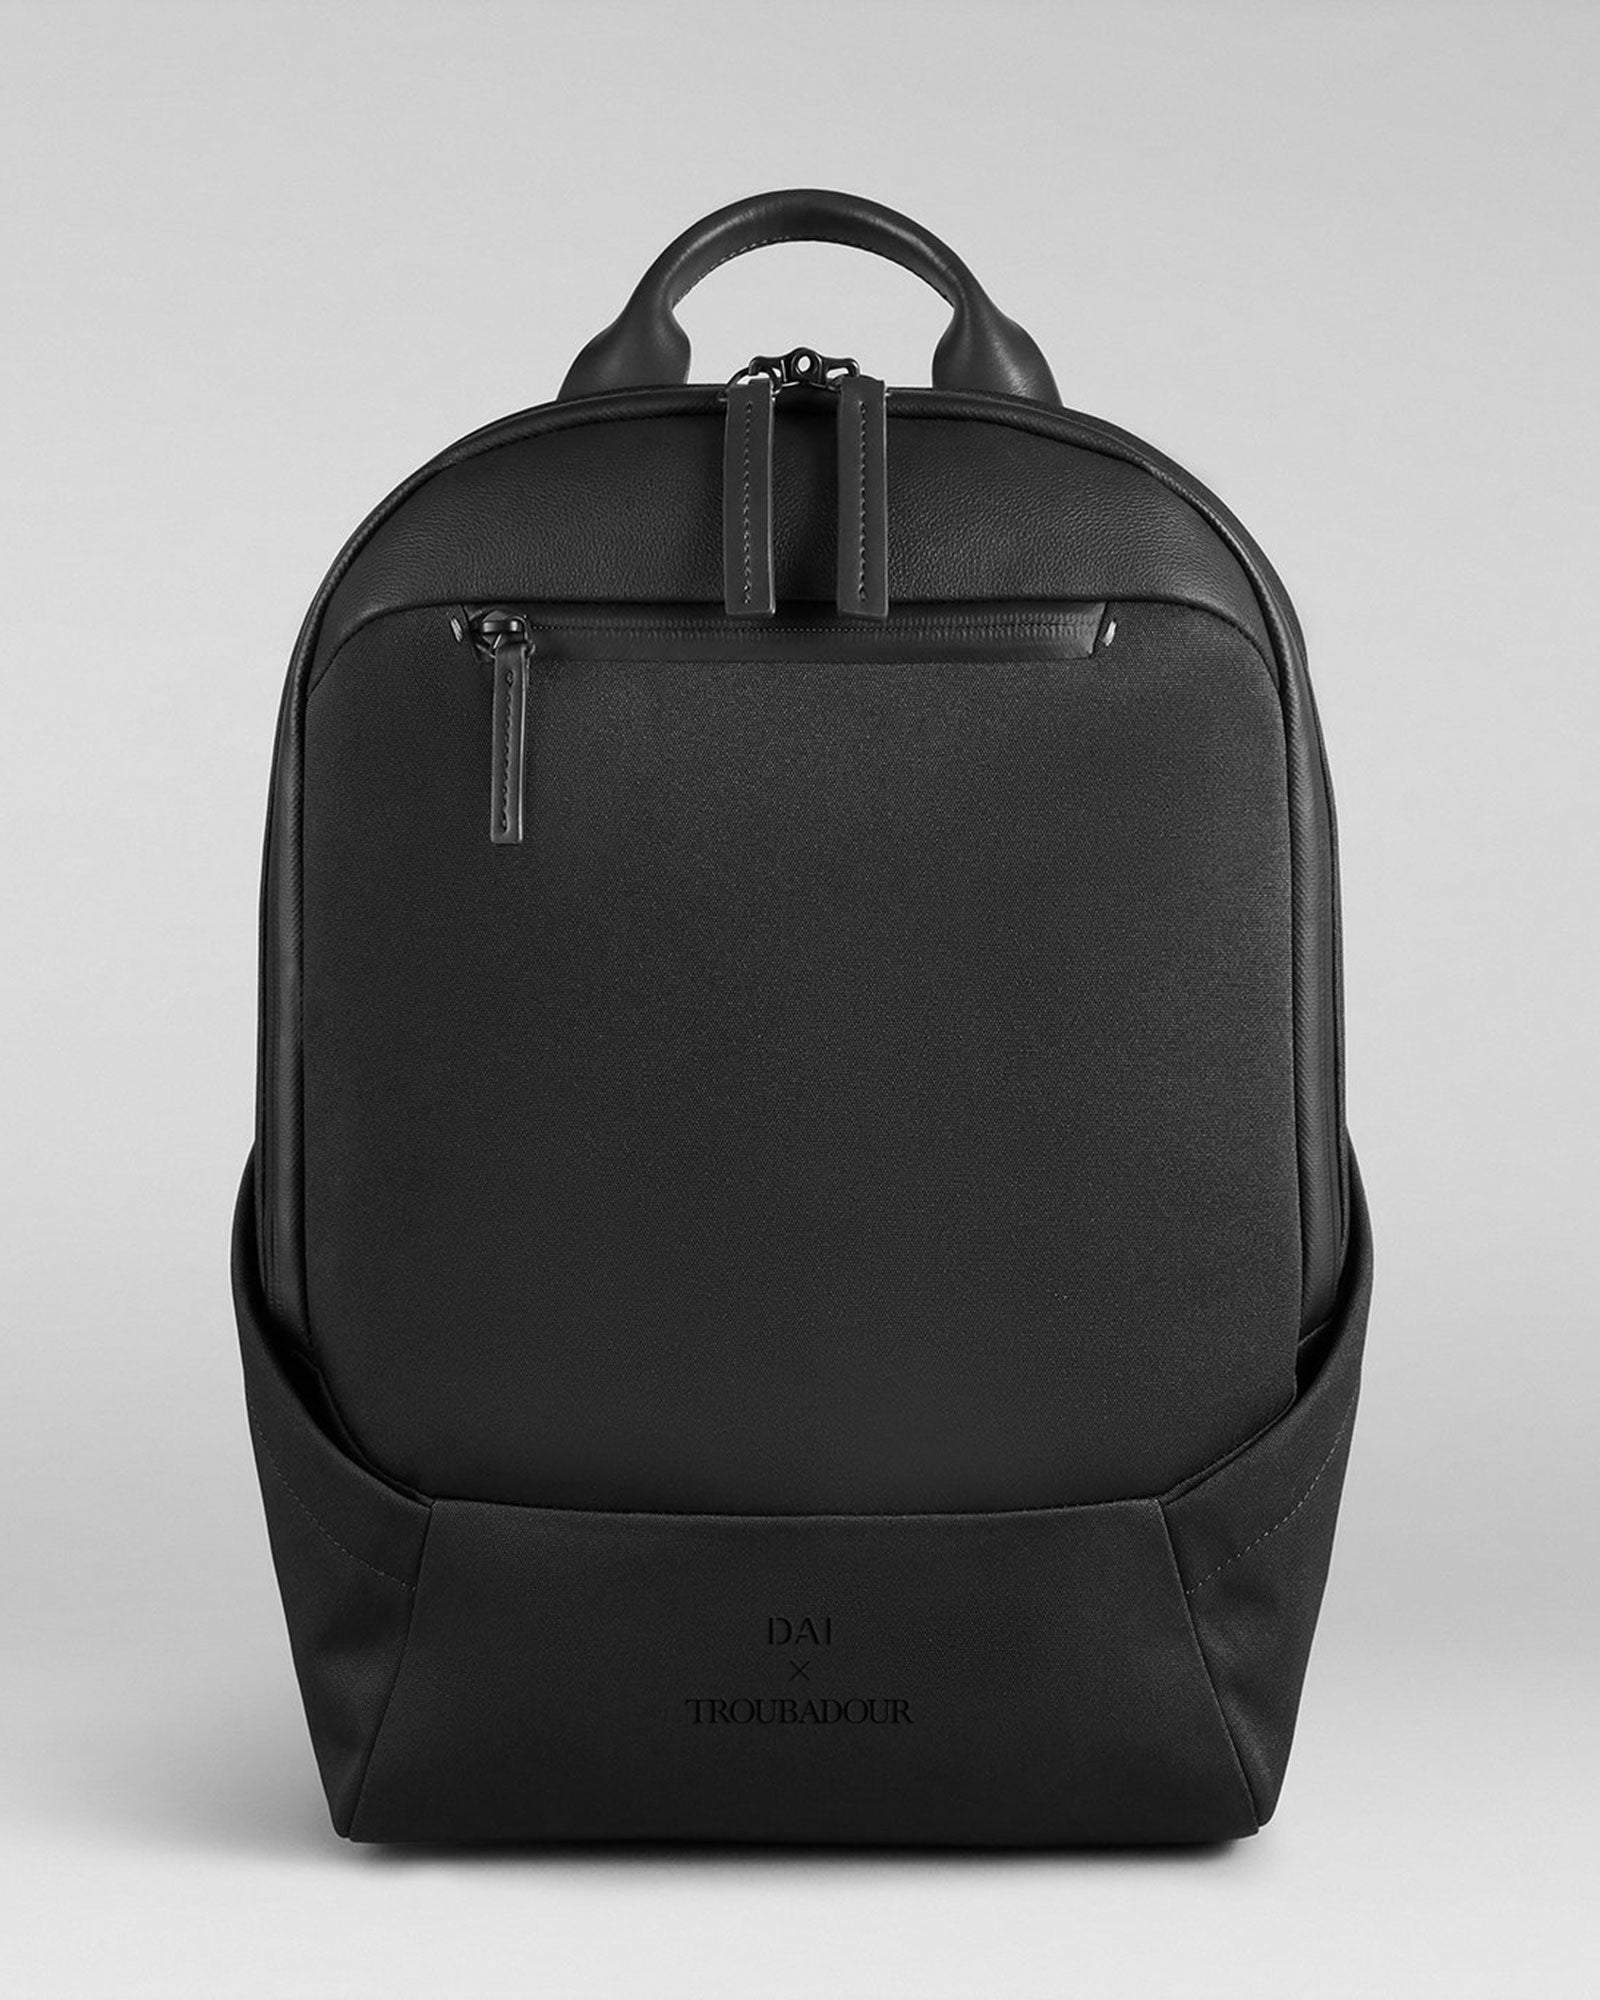 DAI x Troubadour Apex Compact Backpack Black